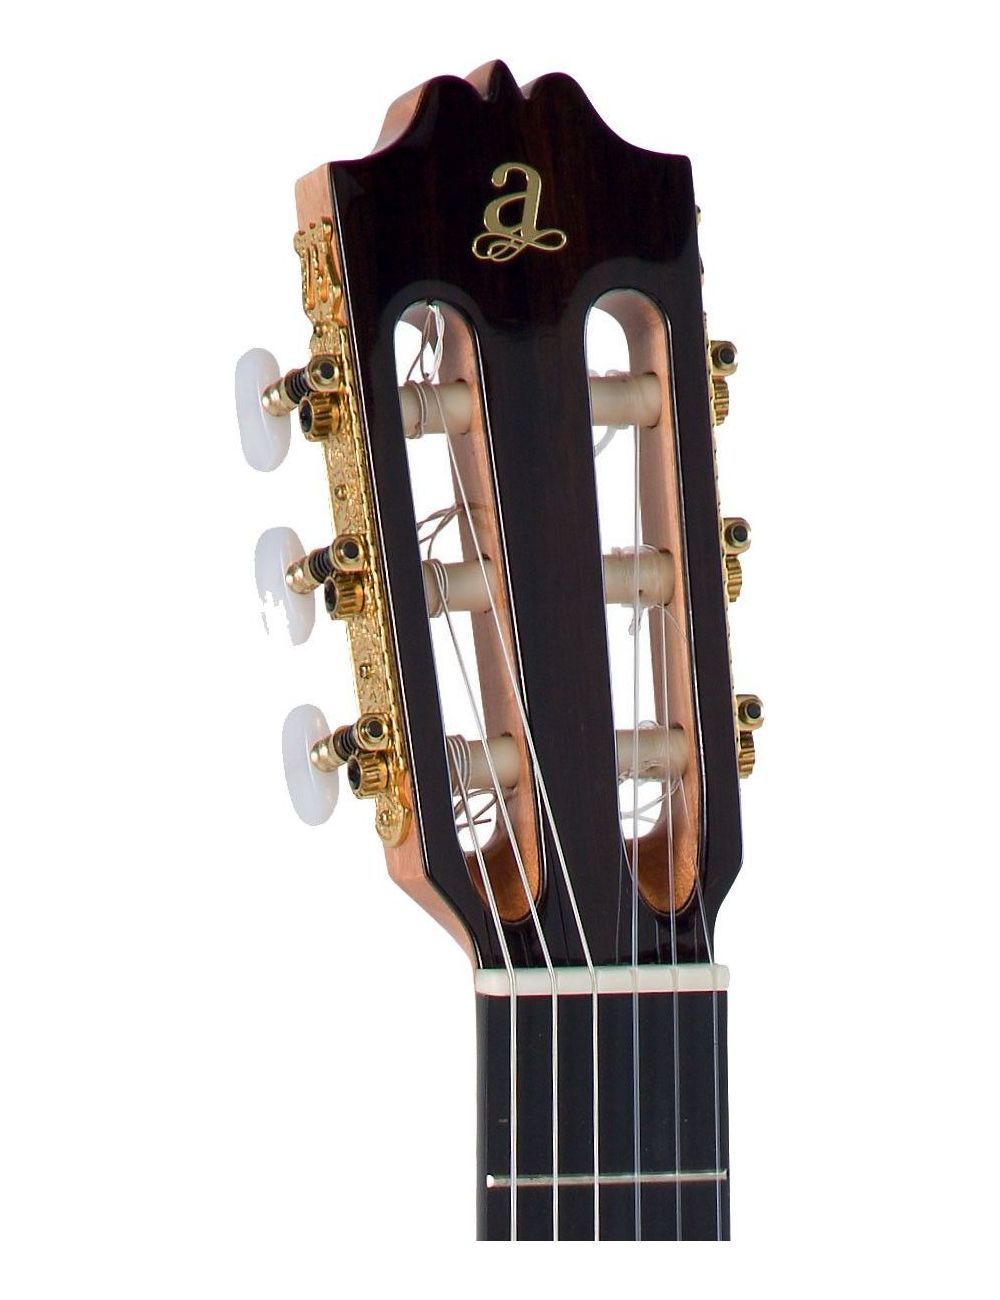 Admira A20 EF Electro Classical guitar ADM20EF Electro-Classical